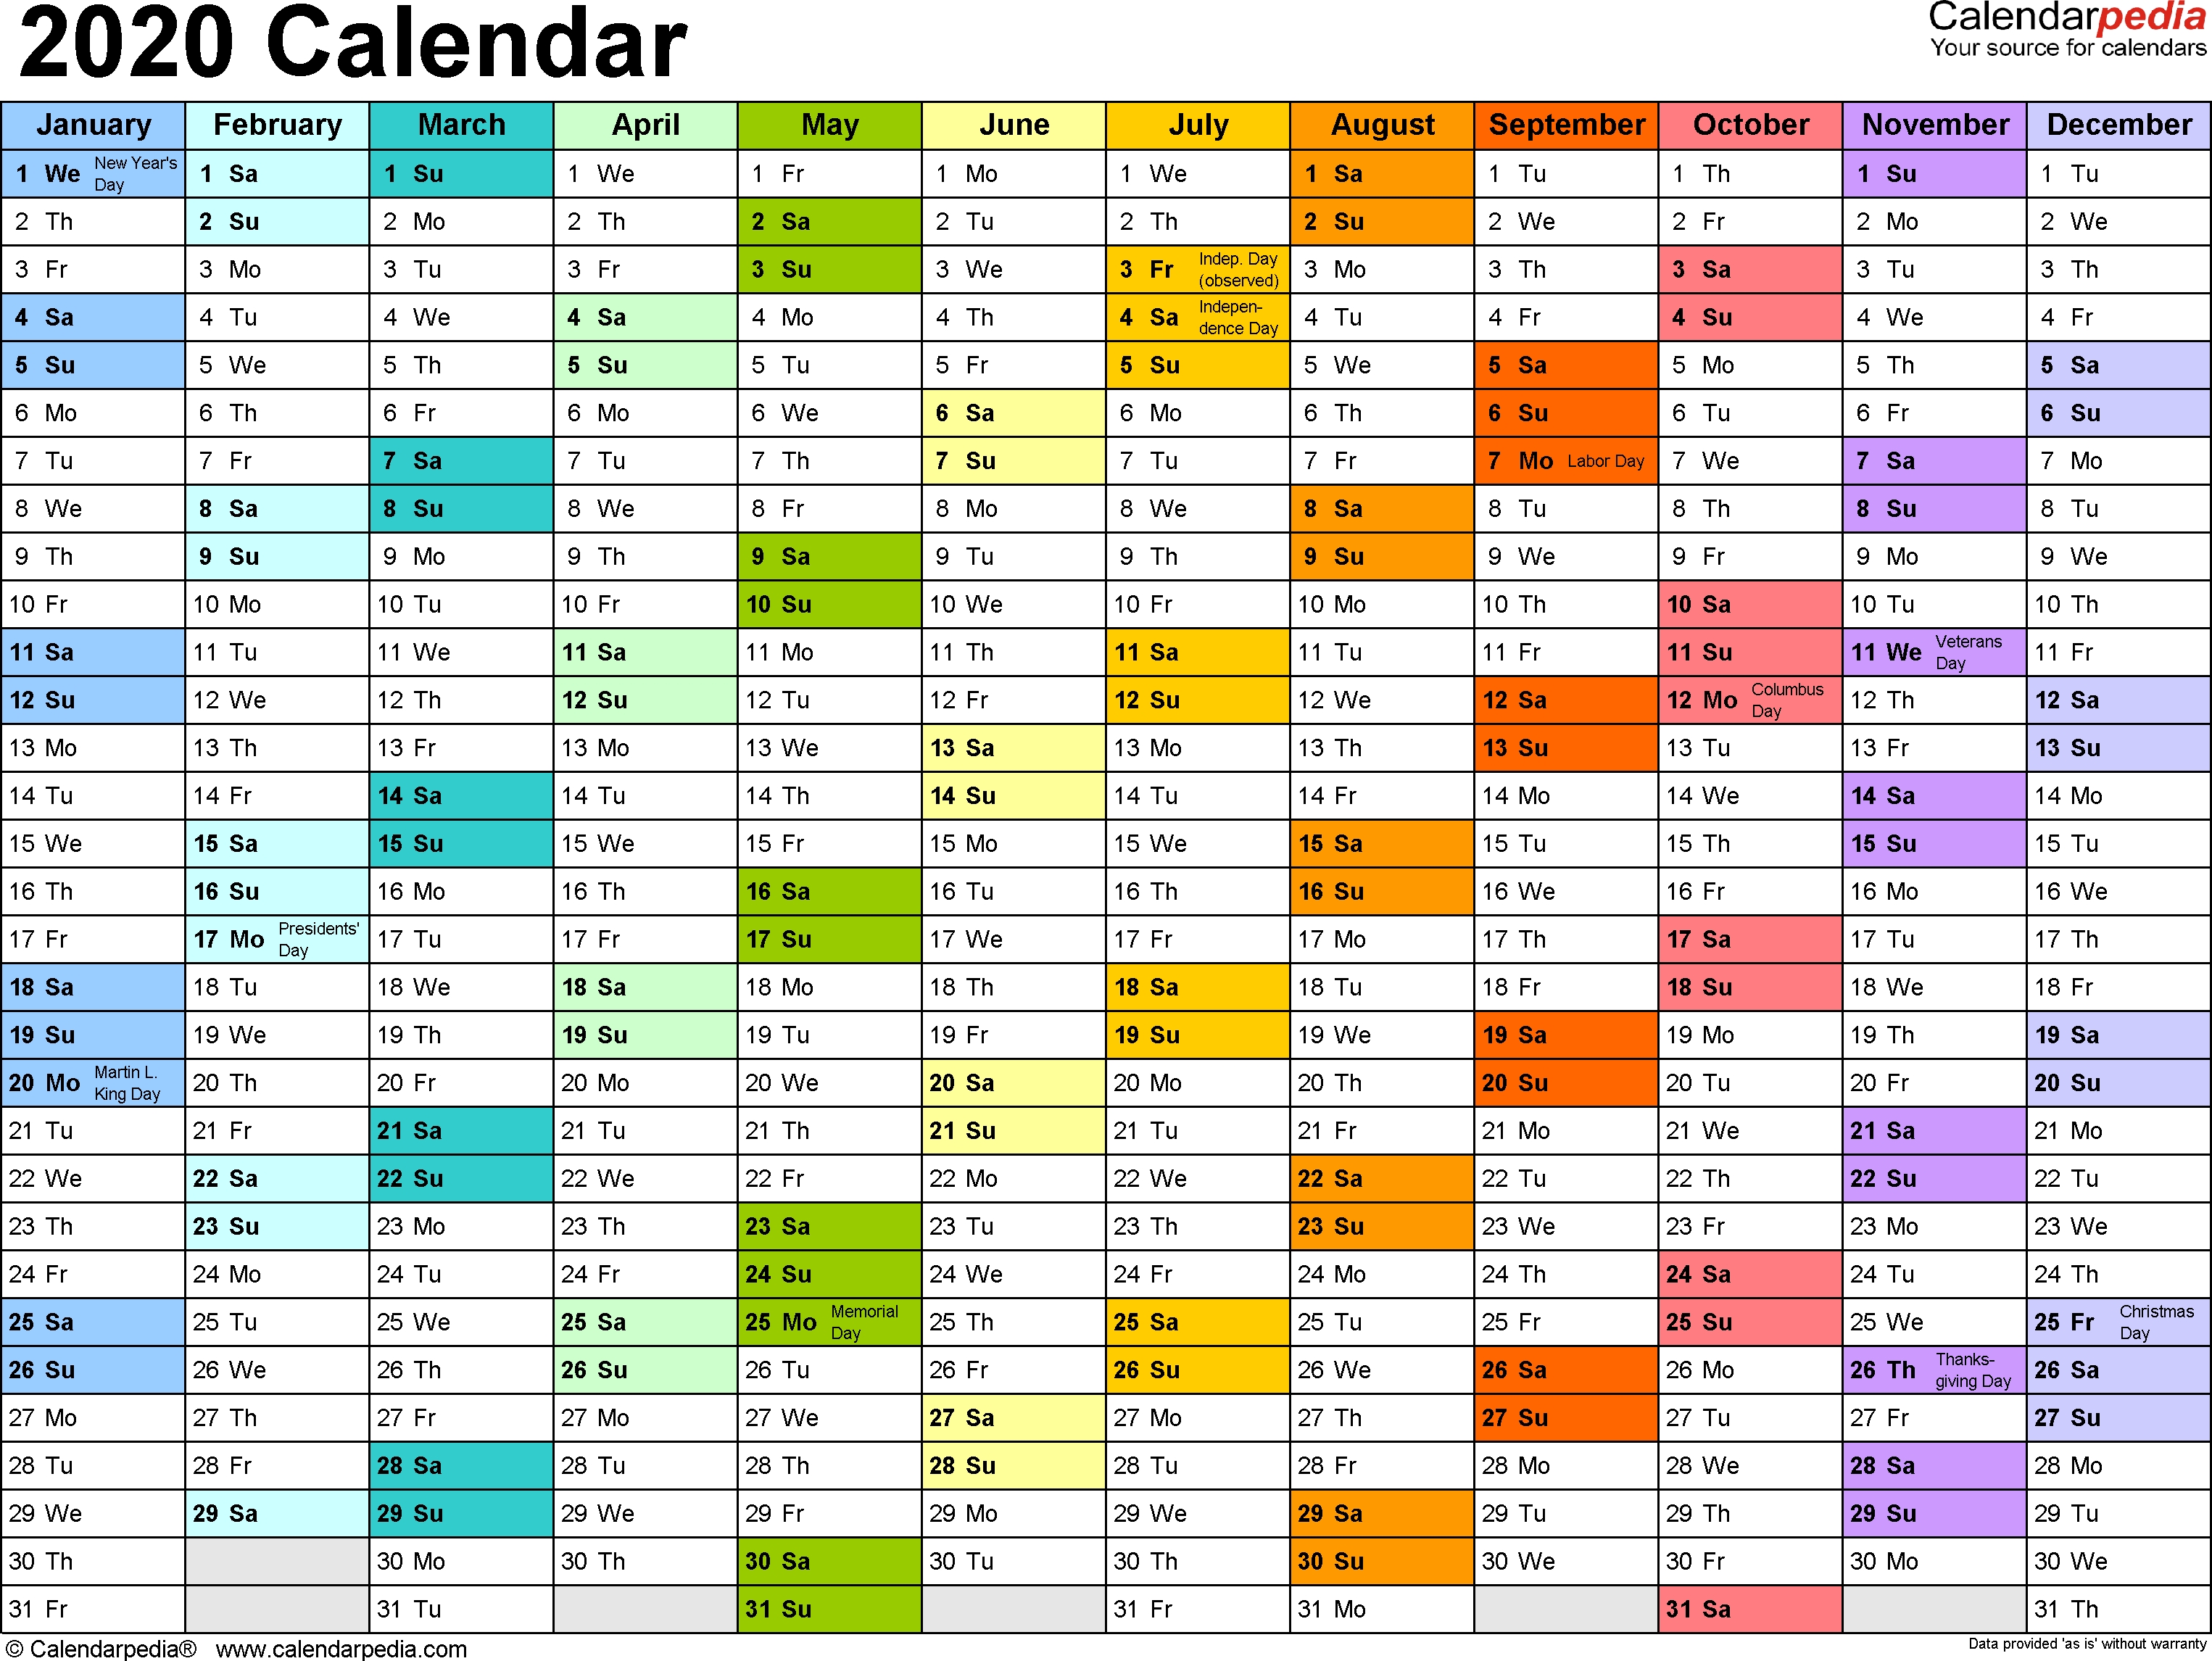 2020 Calendar - 18 Free Printable Word Calendar Templates-Word Calendar Templates 2020